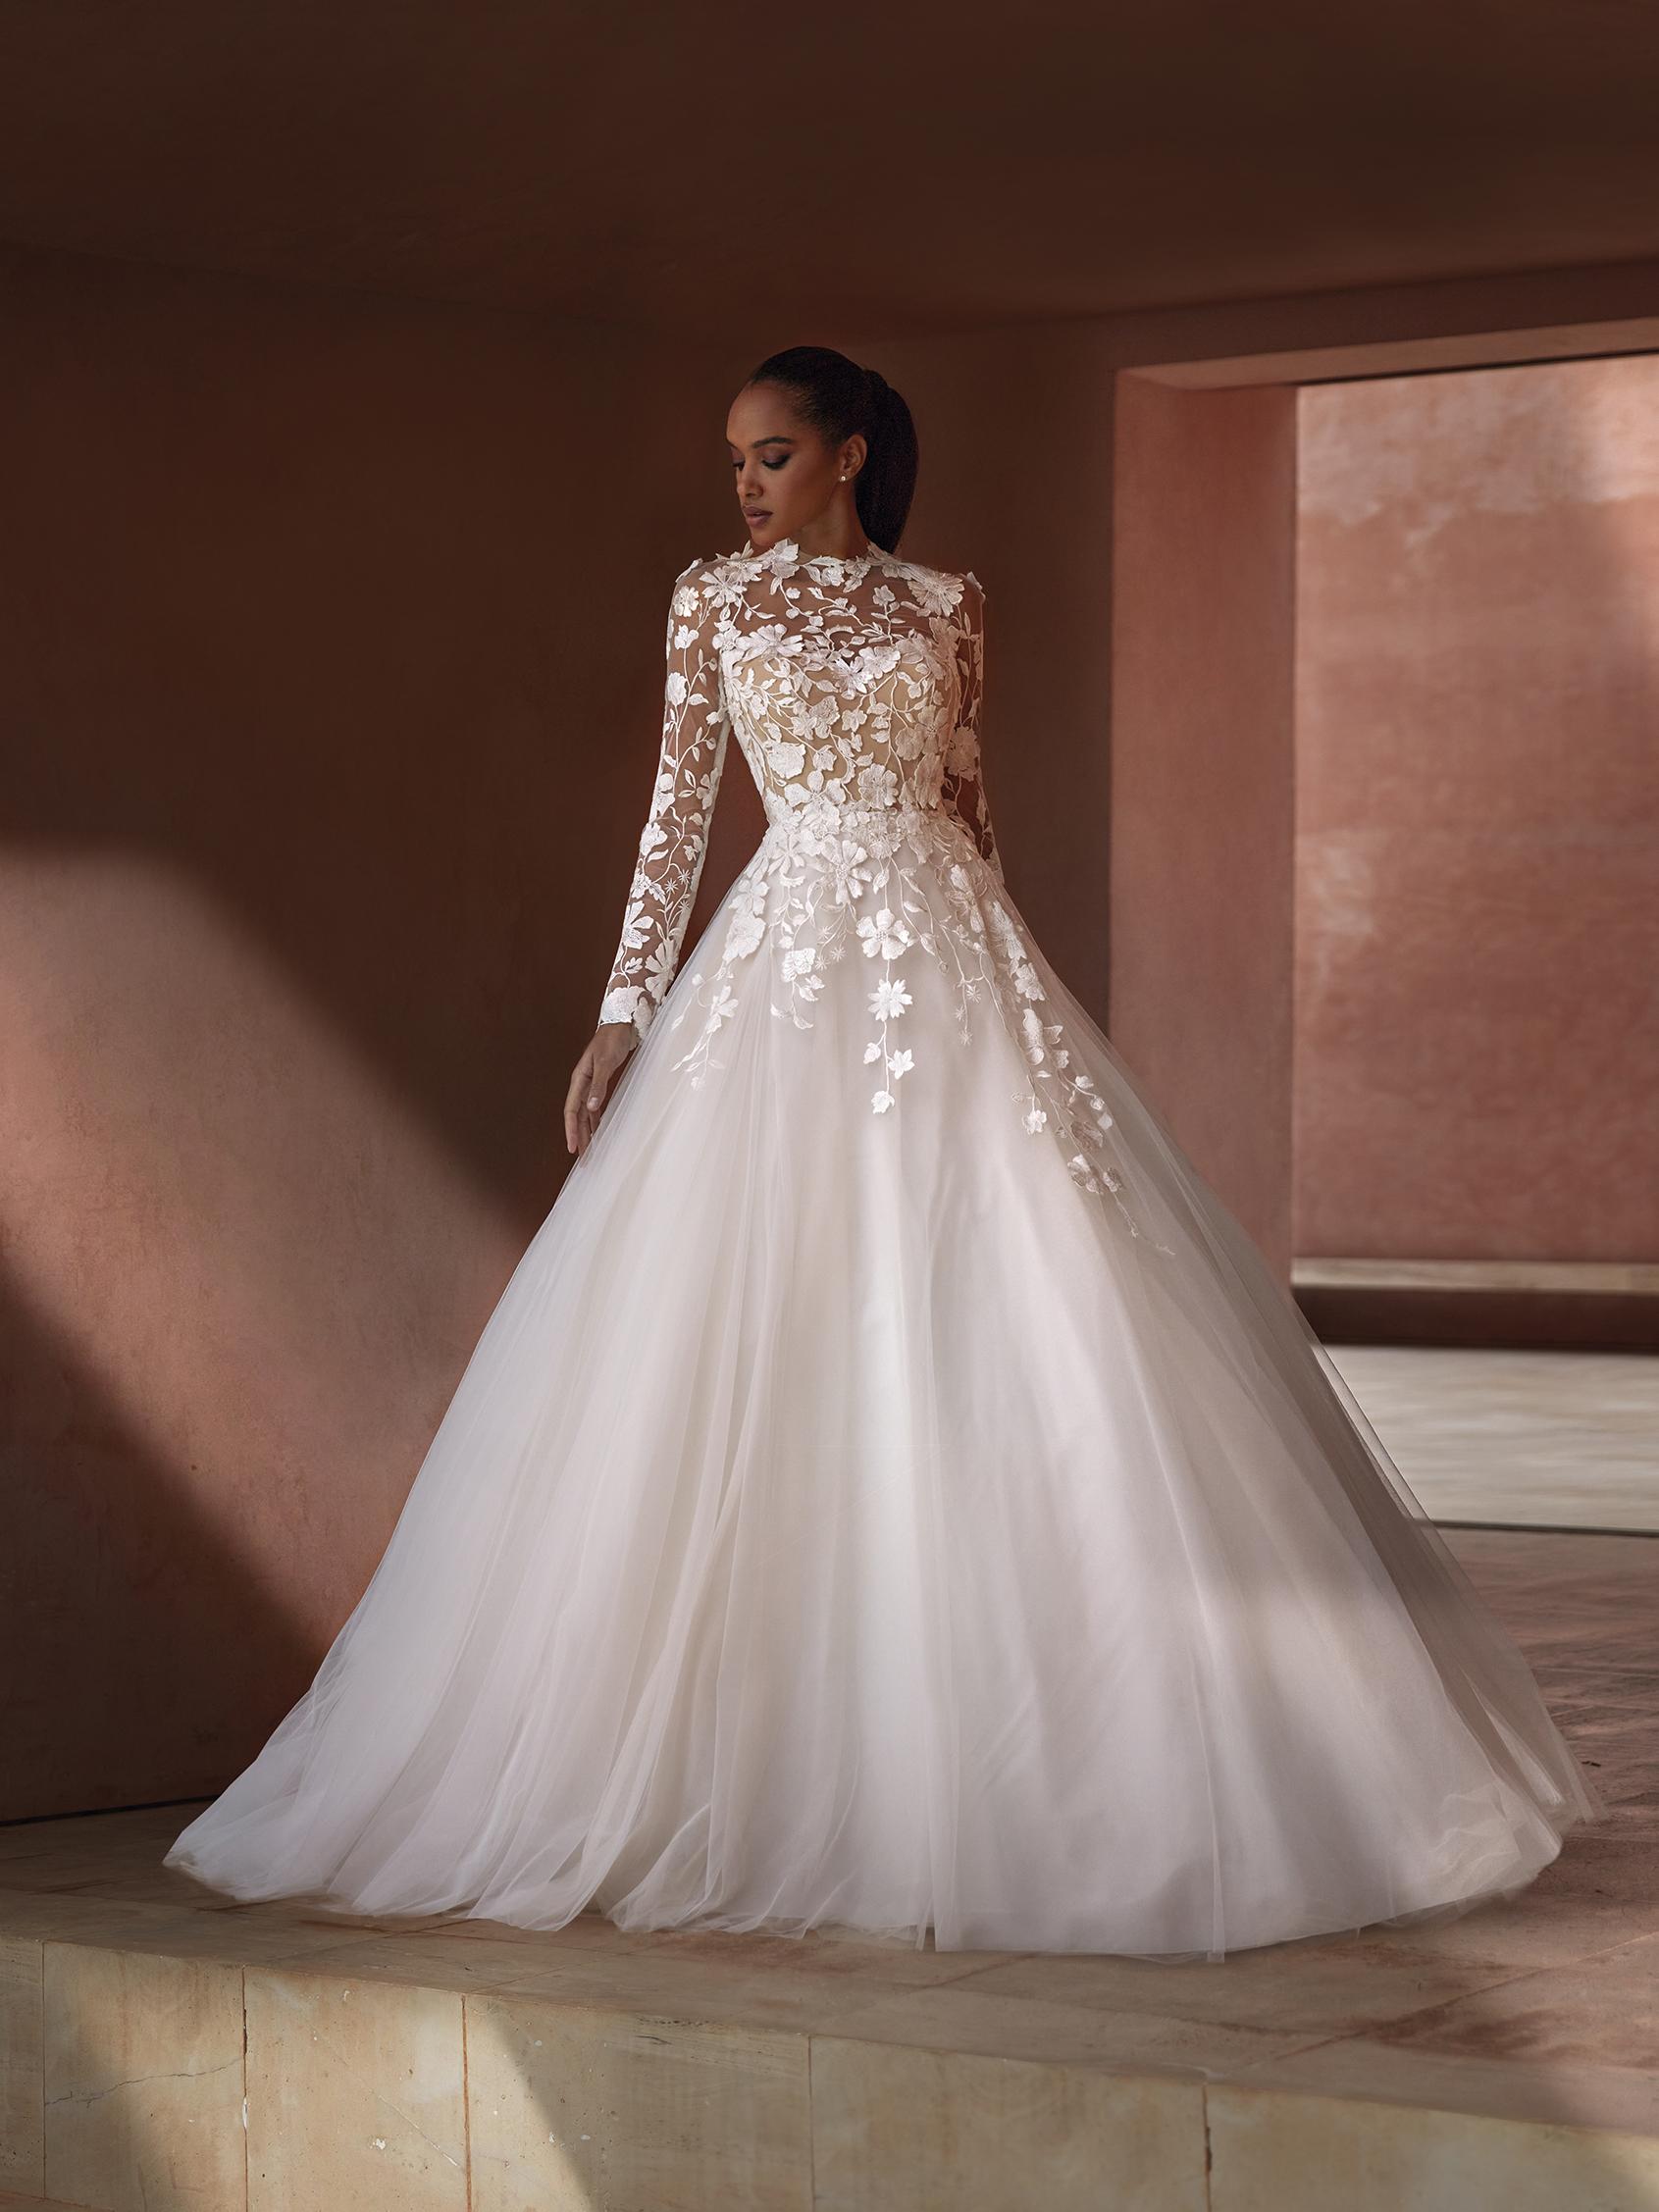 High Neck Lace Applique Formal Wedding Bridal Gown (36208556) - eDressit